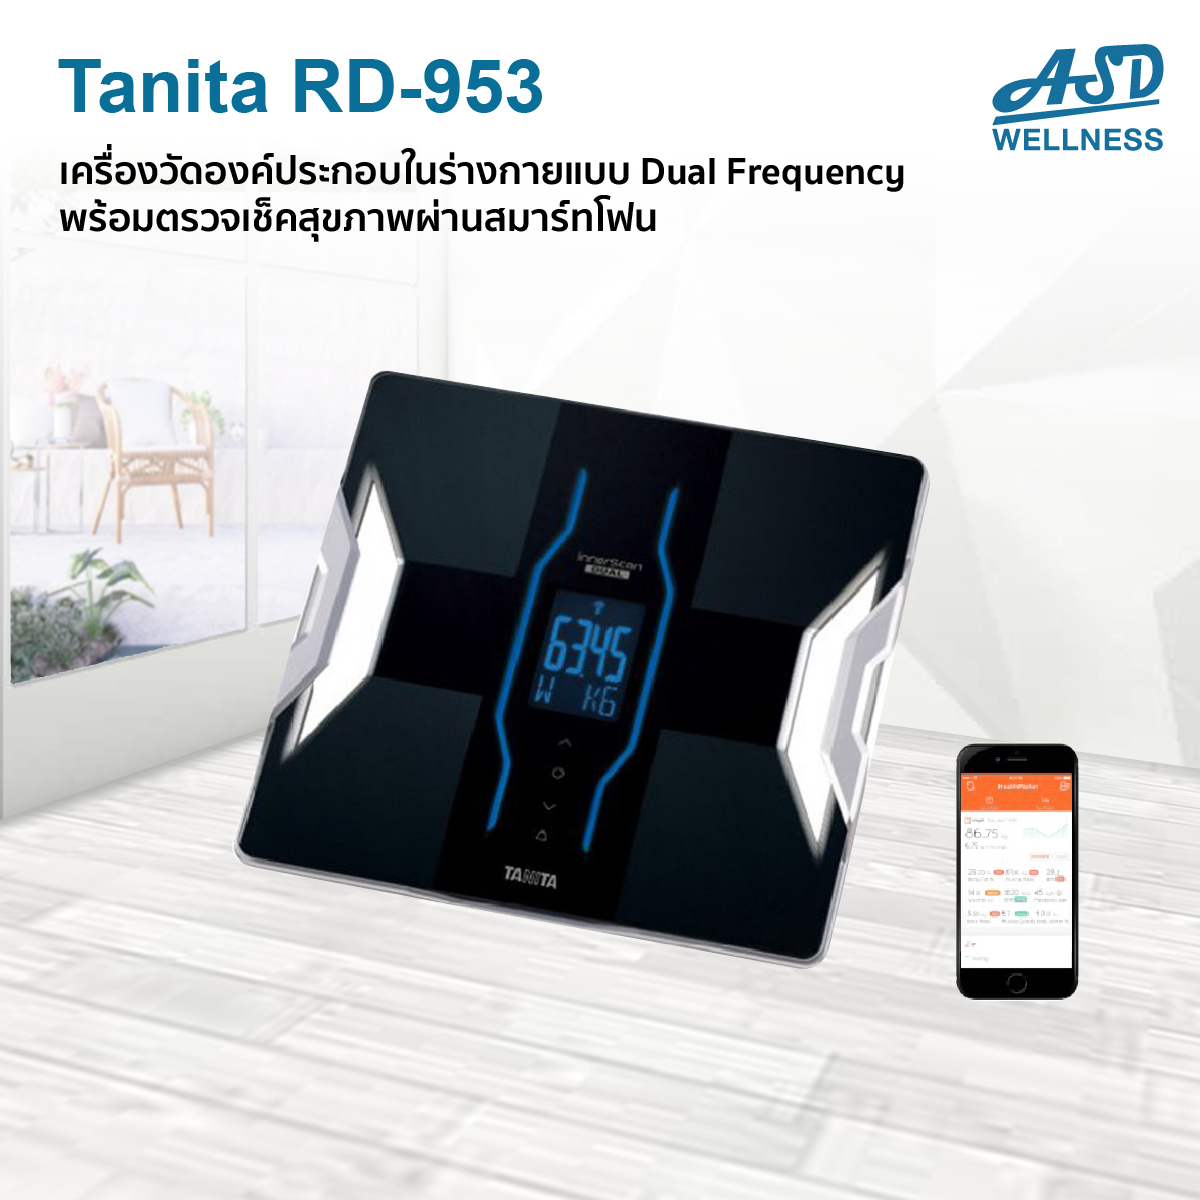 TANITA RD-953 เครื่องวัดองค์ประกอบในร่างกายแบบ Dual Frequency พร้อมตรวจเช็คสุขภาพผ่านสมาร์ทโฟน